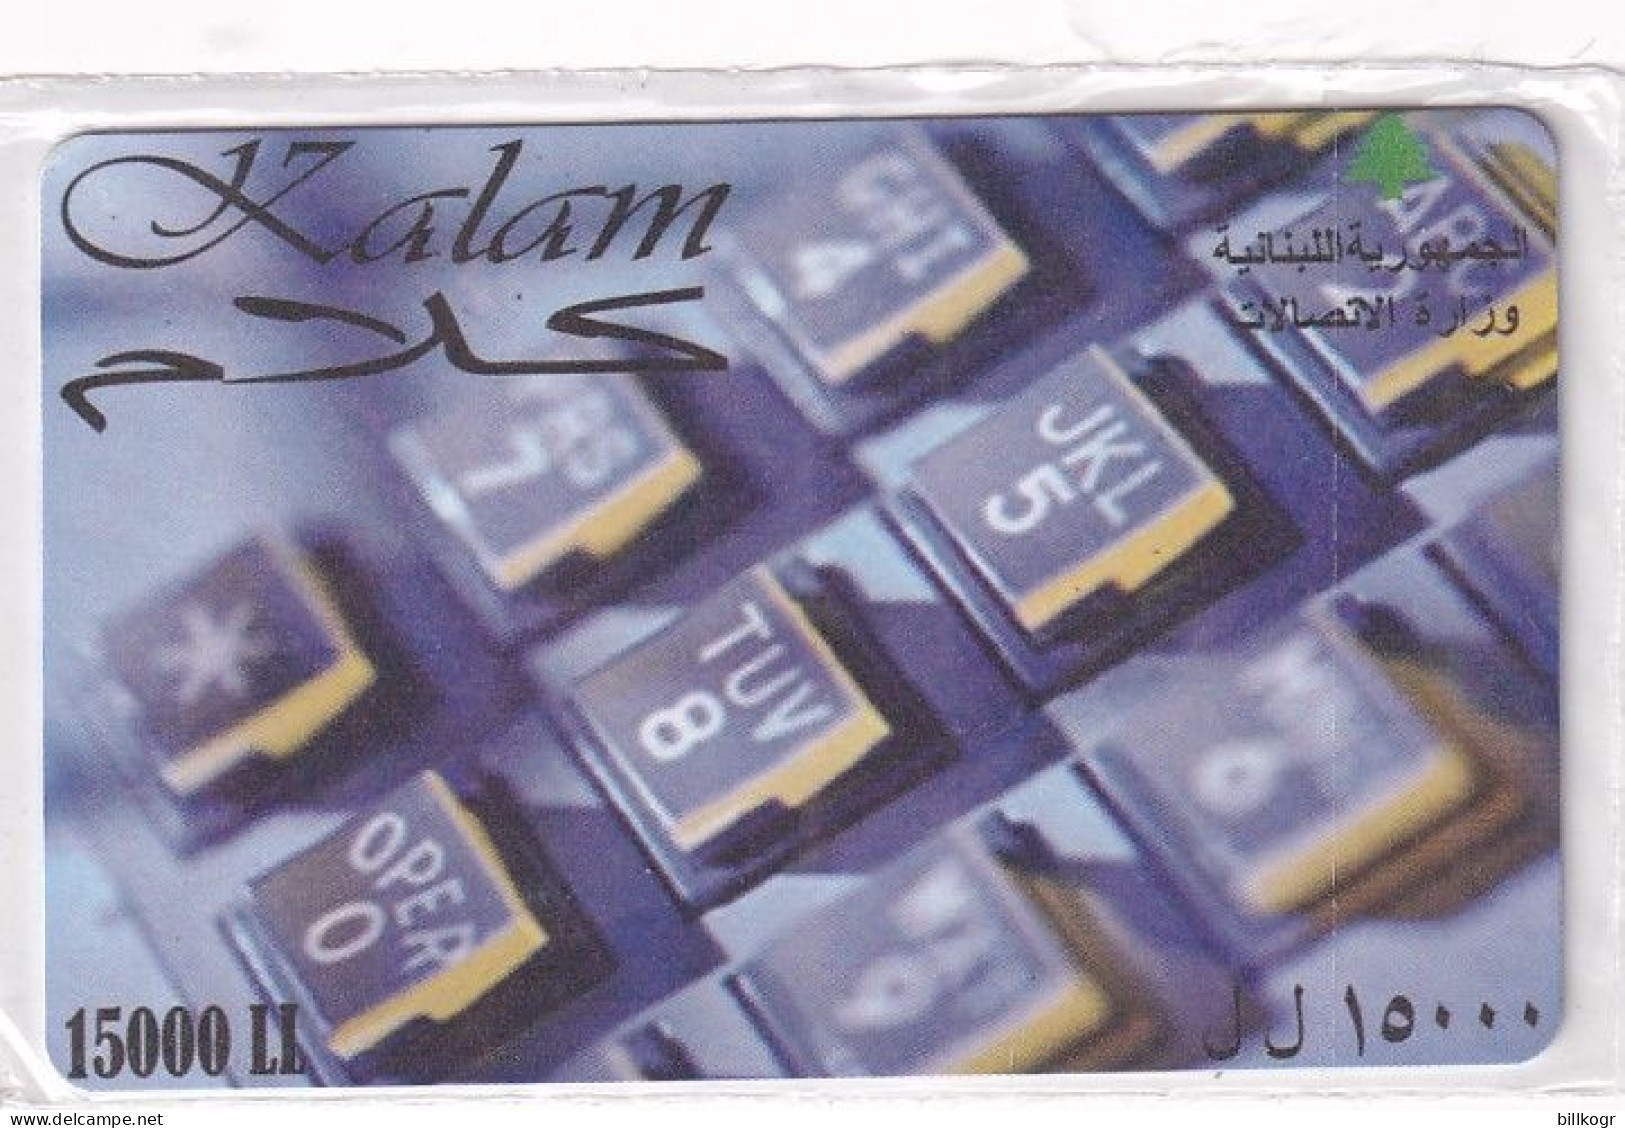 LEBANON - Kalam Prepaid Card 15000LL, CN : 1000, Exp.date 31/12/05, Mint - Lebanon